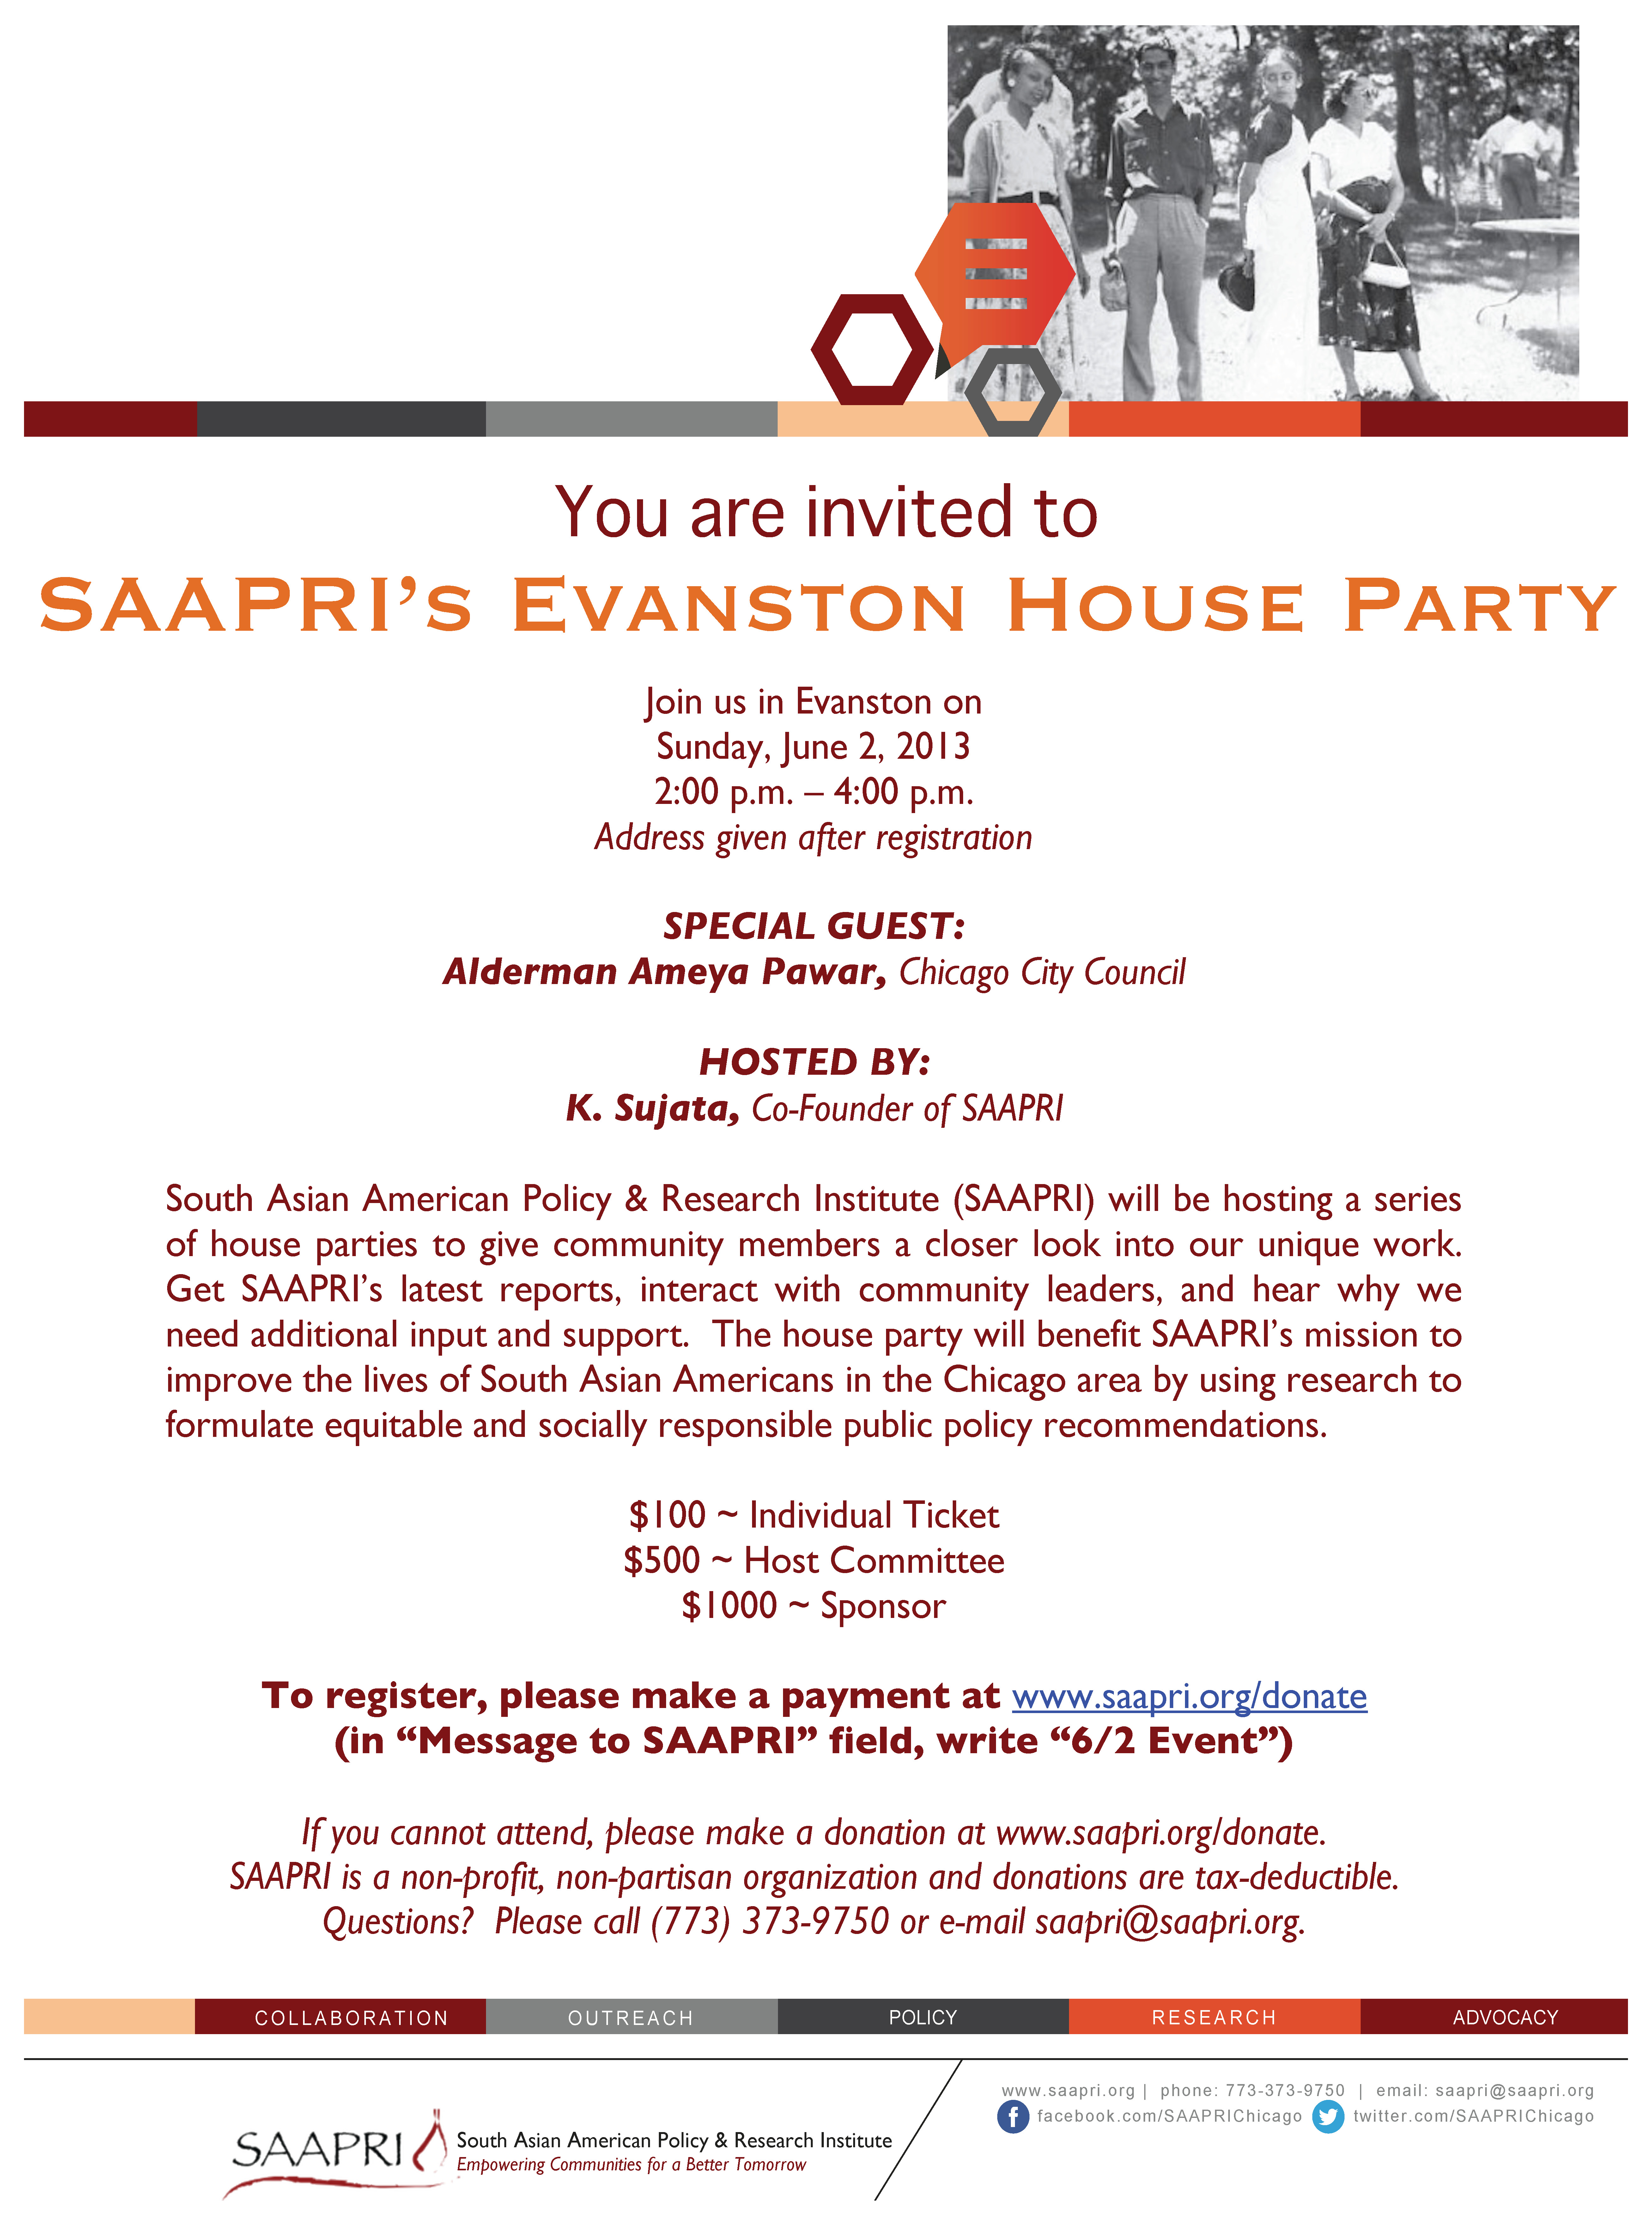 SAAPRI Evanston House Party Invitation